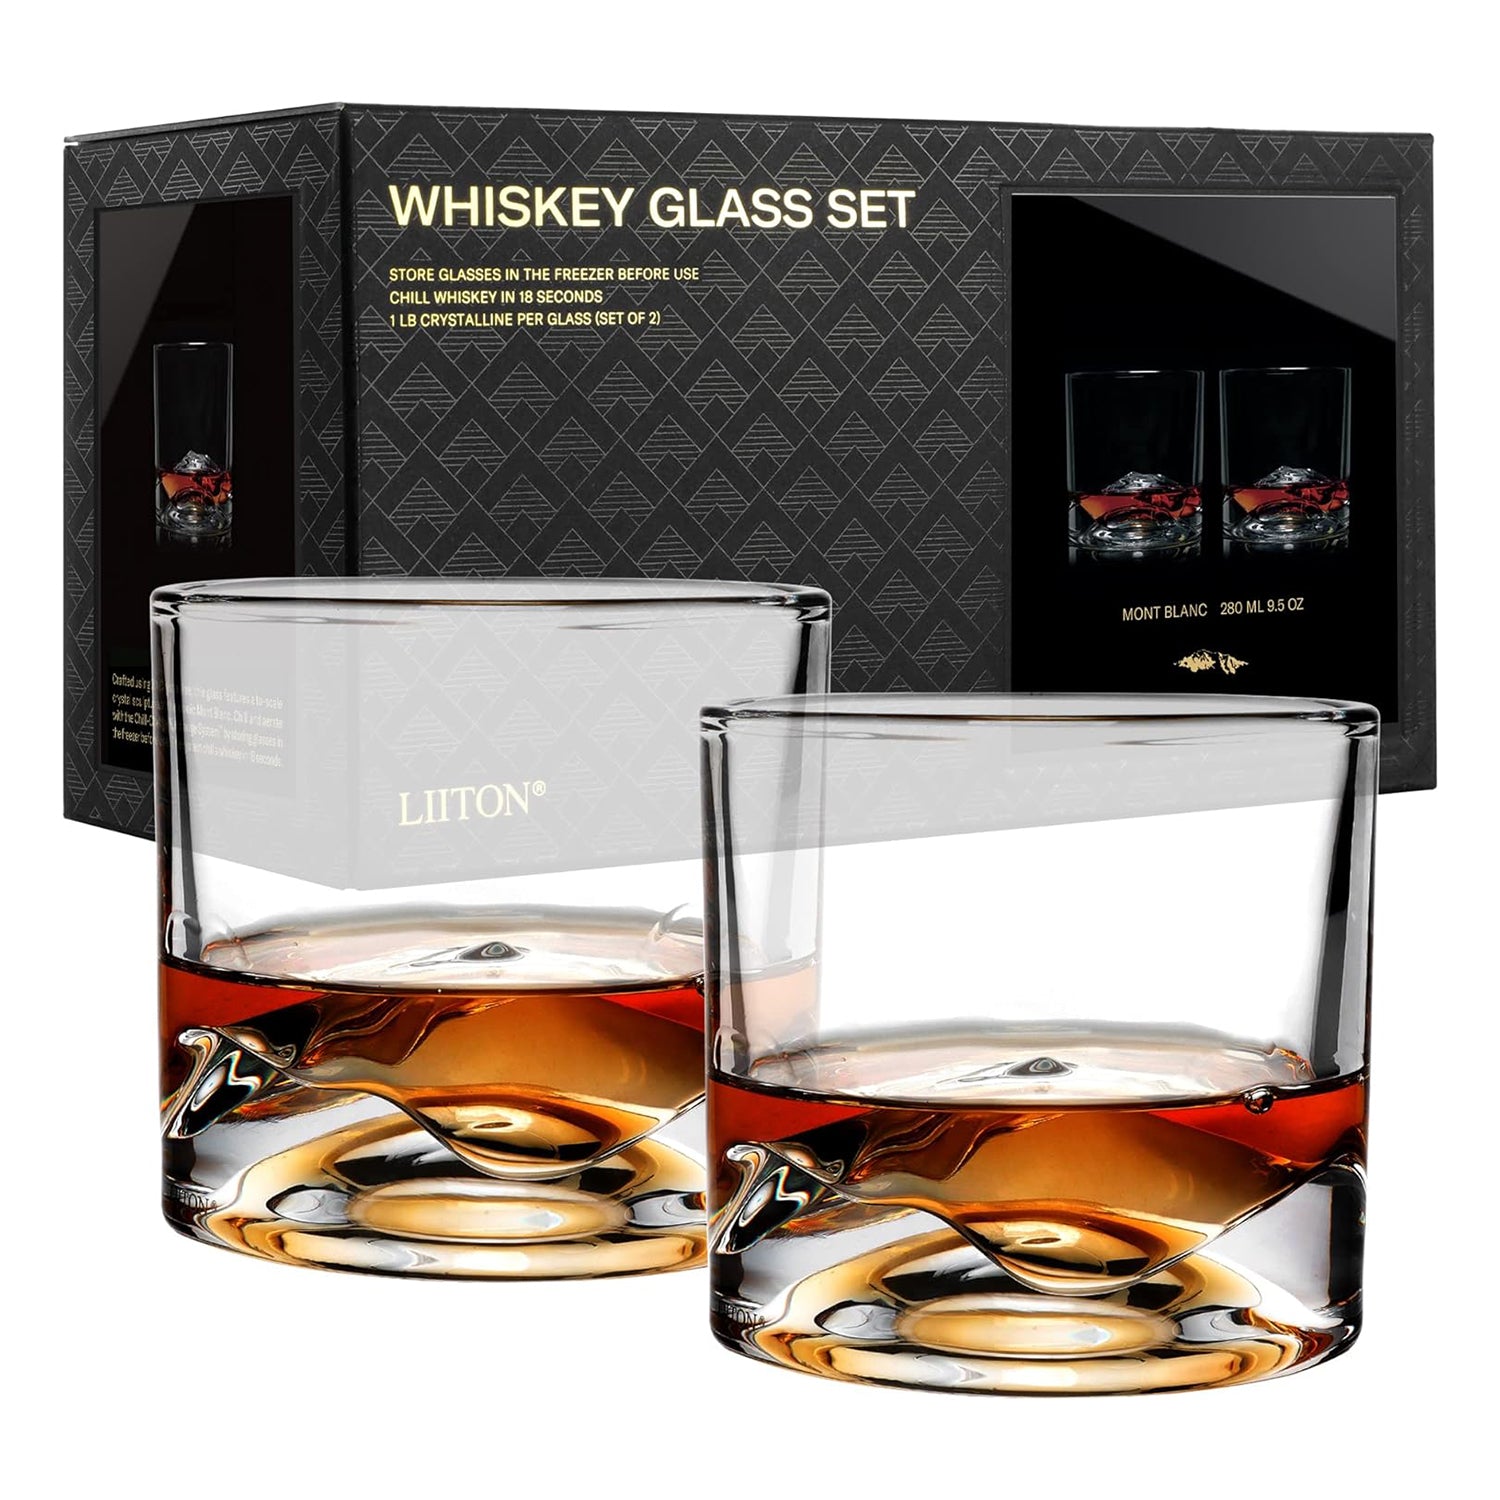 Mont Blanc Crystal Bourbon Whiskey Glasses - Set of 2 - LIITON